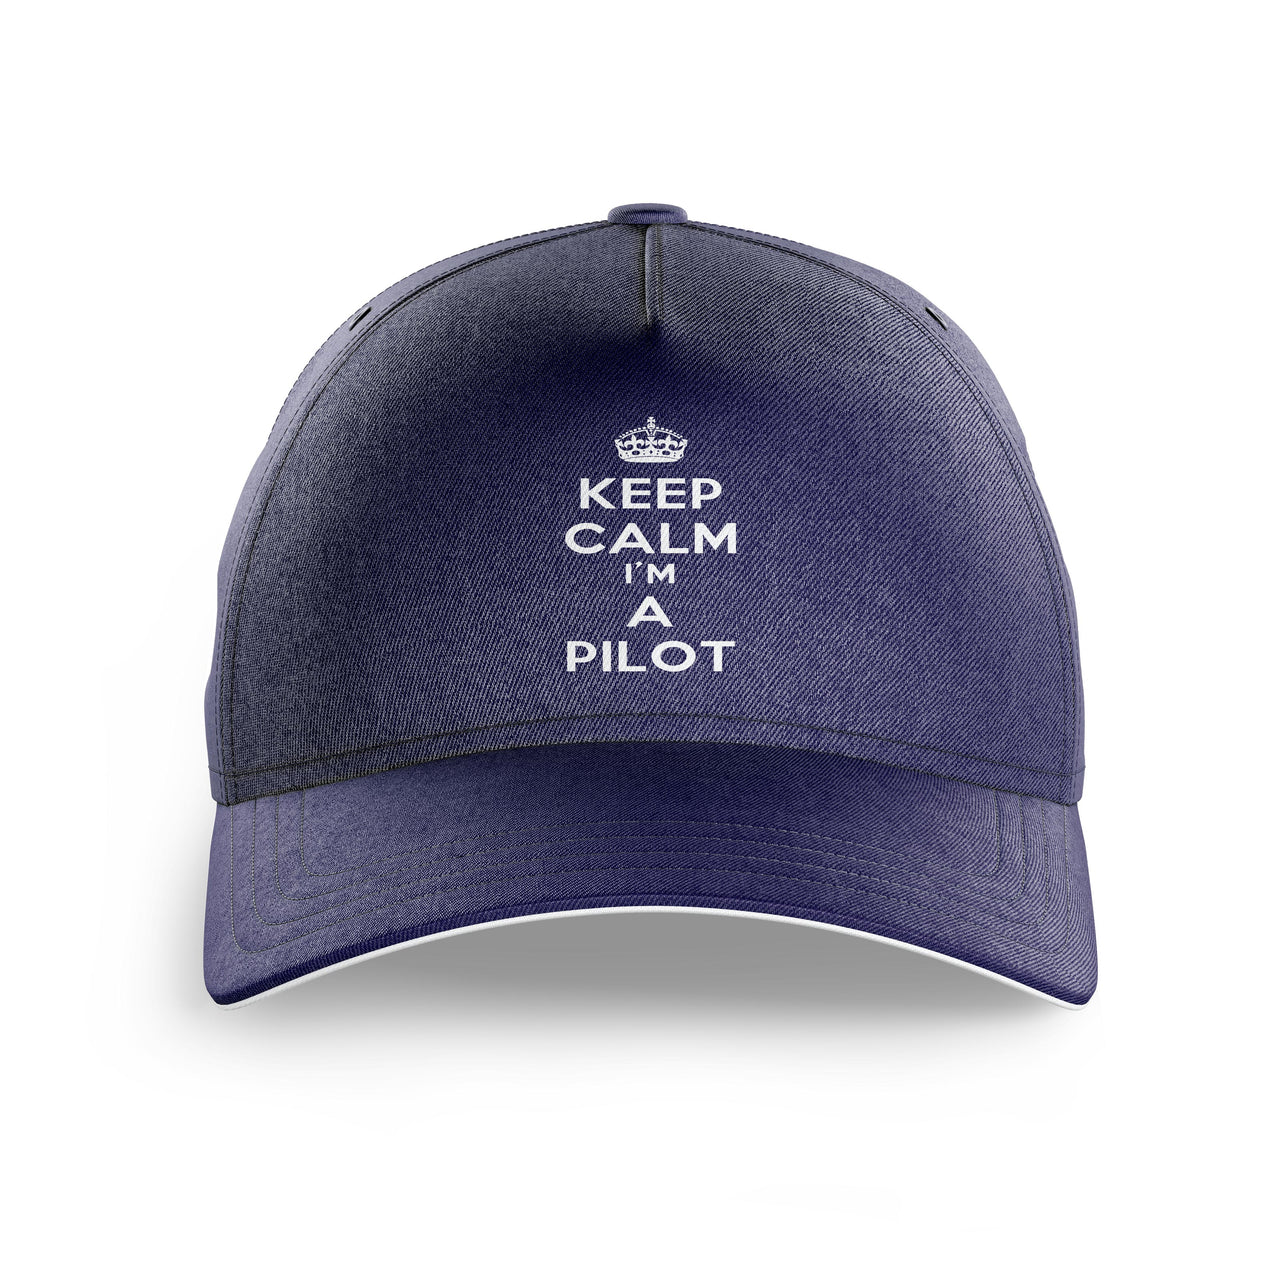 Keep Calm I'm a Pilot Printed Hats